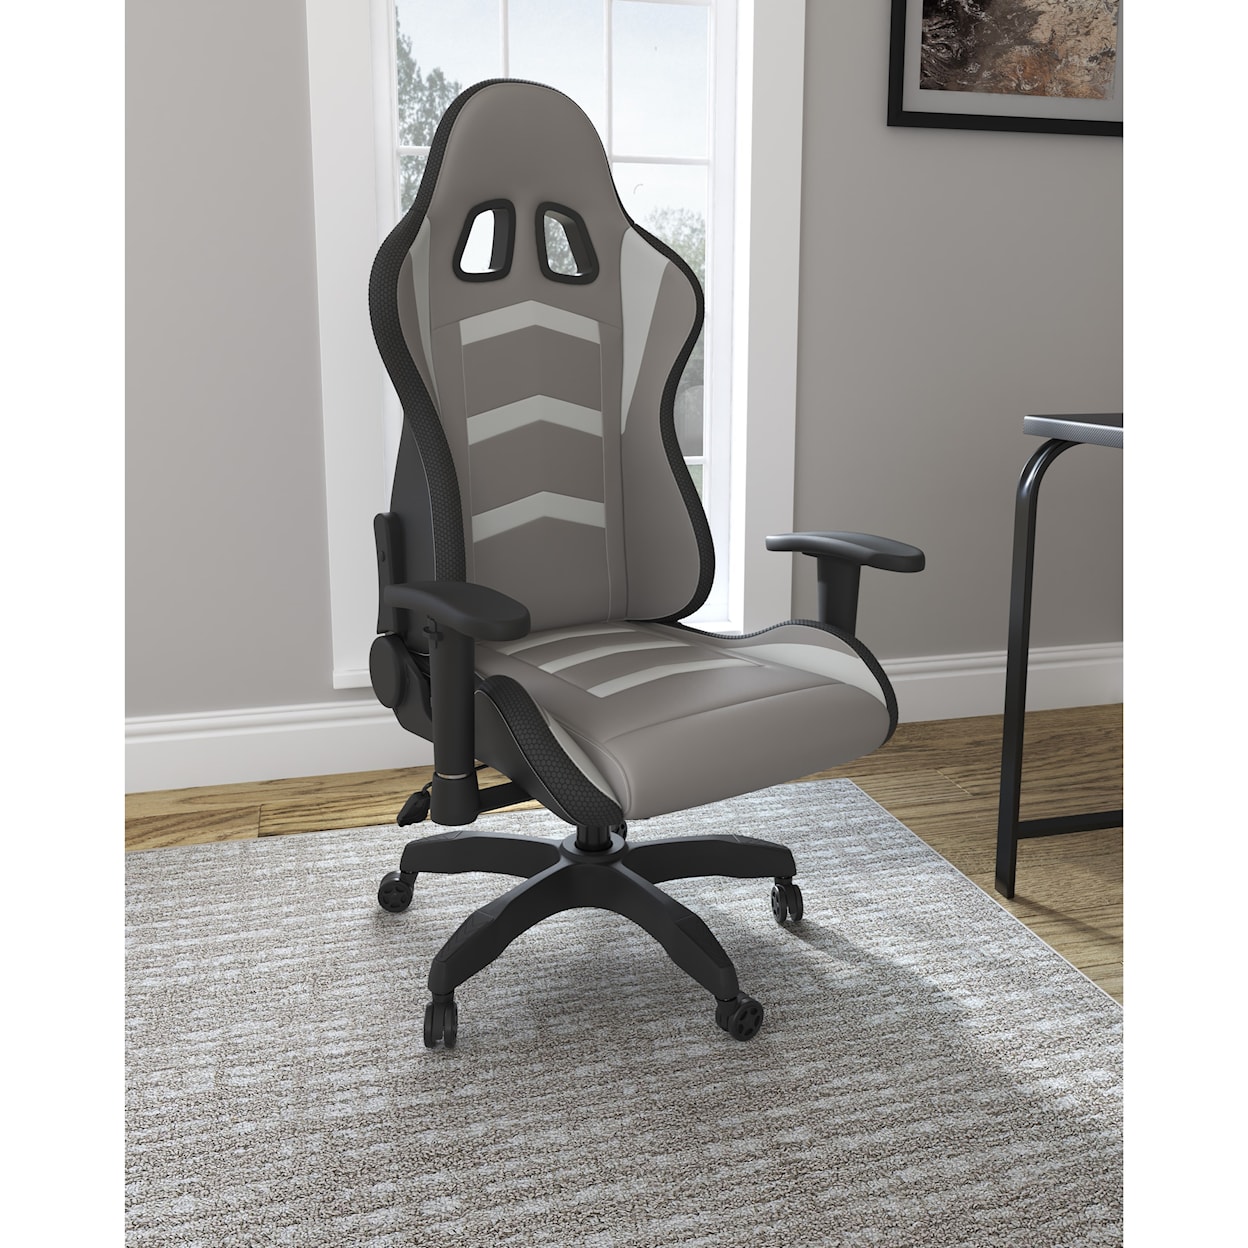 Ashley Furniture Signature Design Lynxtyn Home Office Desk Chair